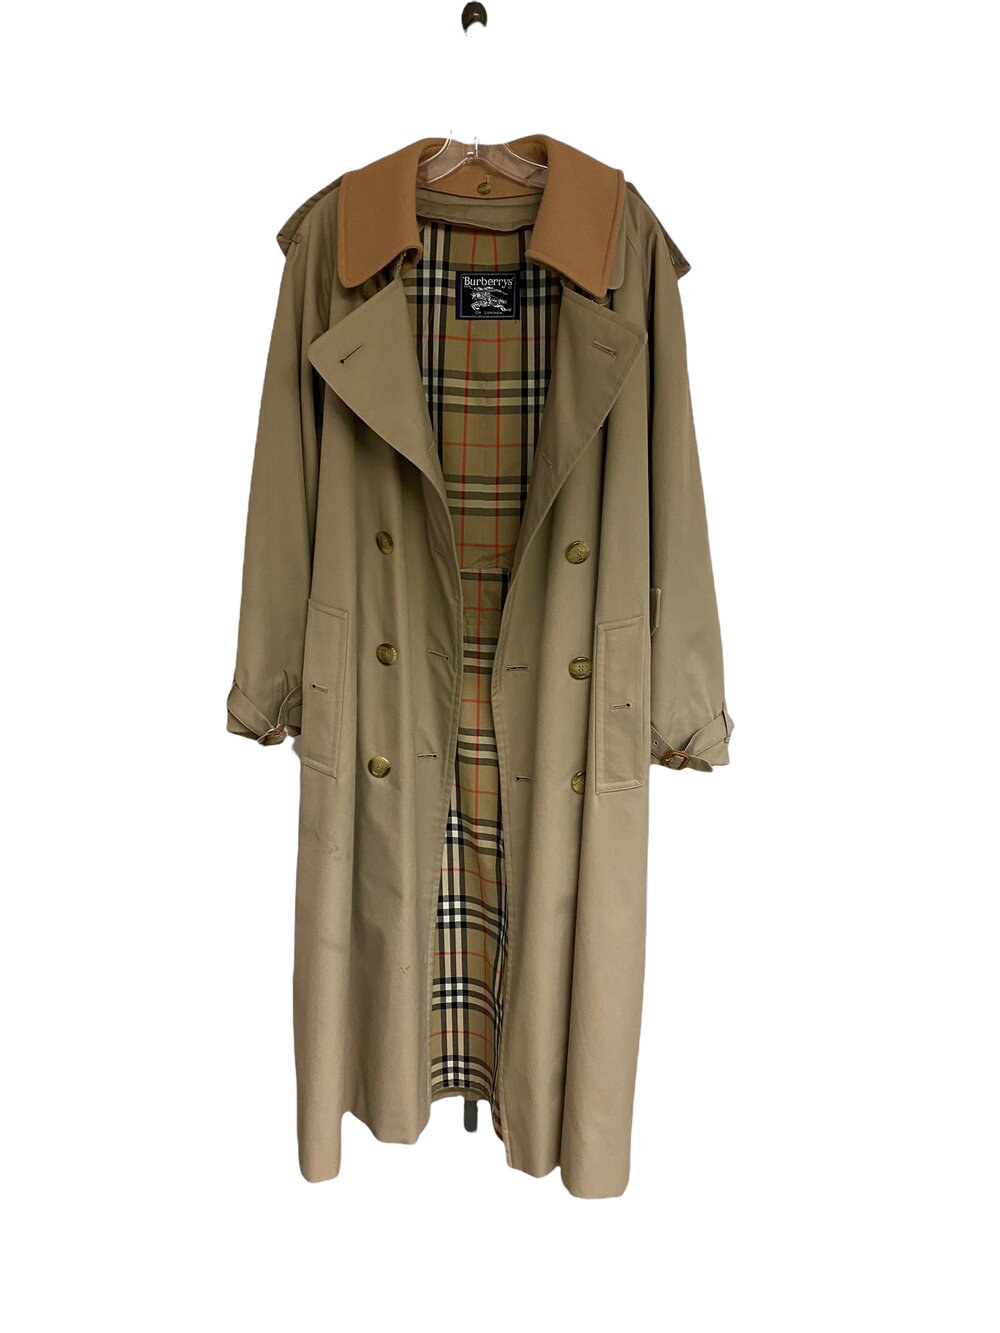 gans straal Correspondentie Burberry Trench Coat, Size 40 Regular — Mercer Island Thrift Shop